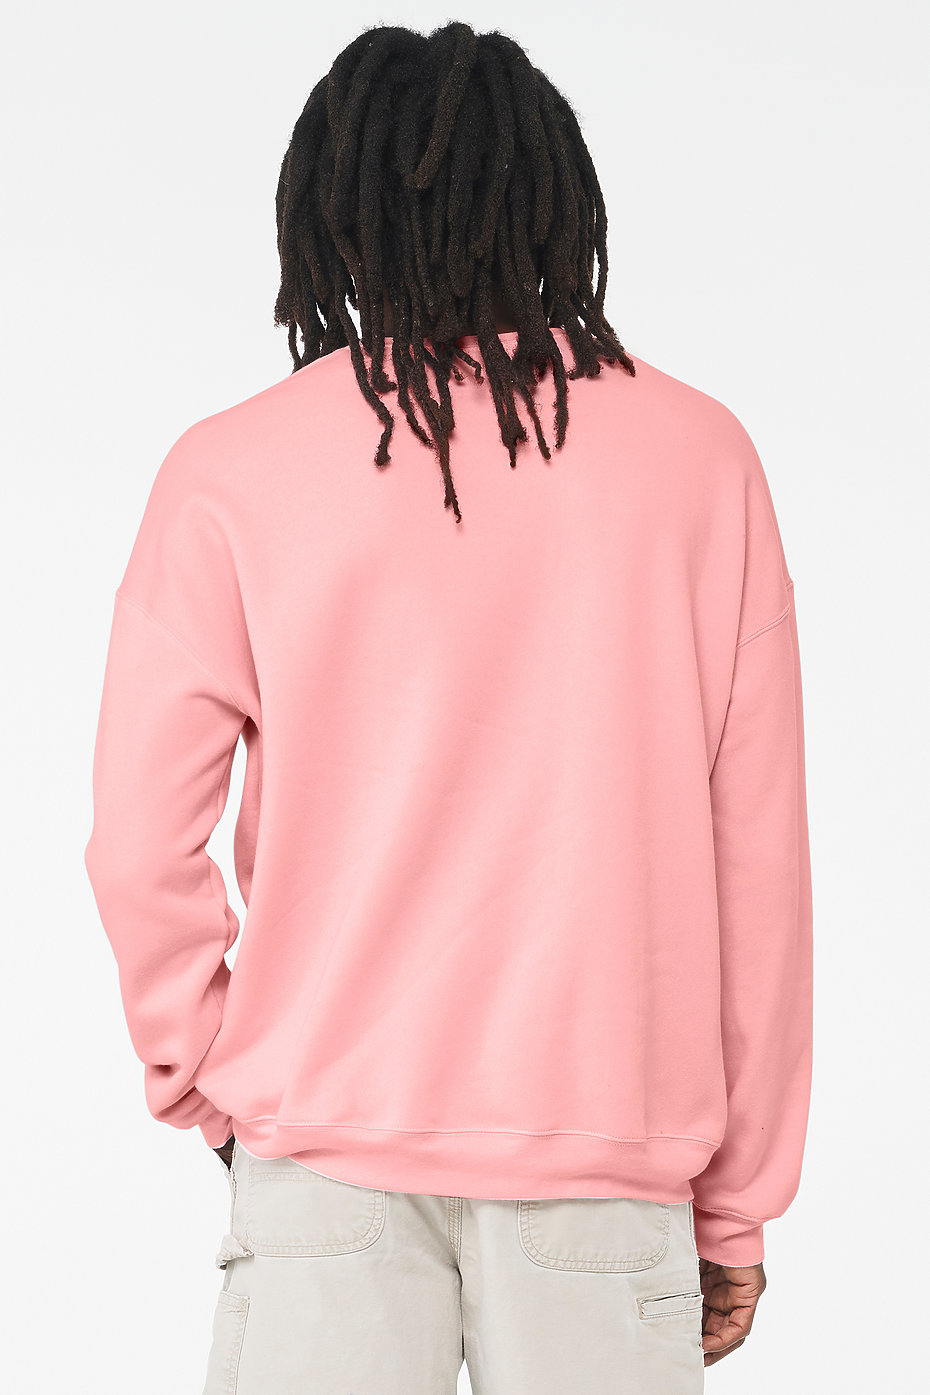 Sweatshirts For Men, Bulk Unisex Sweatshirts, Wholesale Crewneck  Sweatshirts